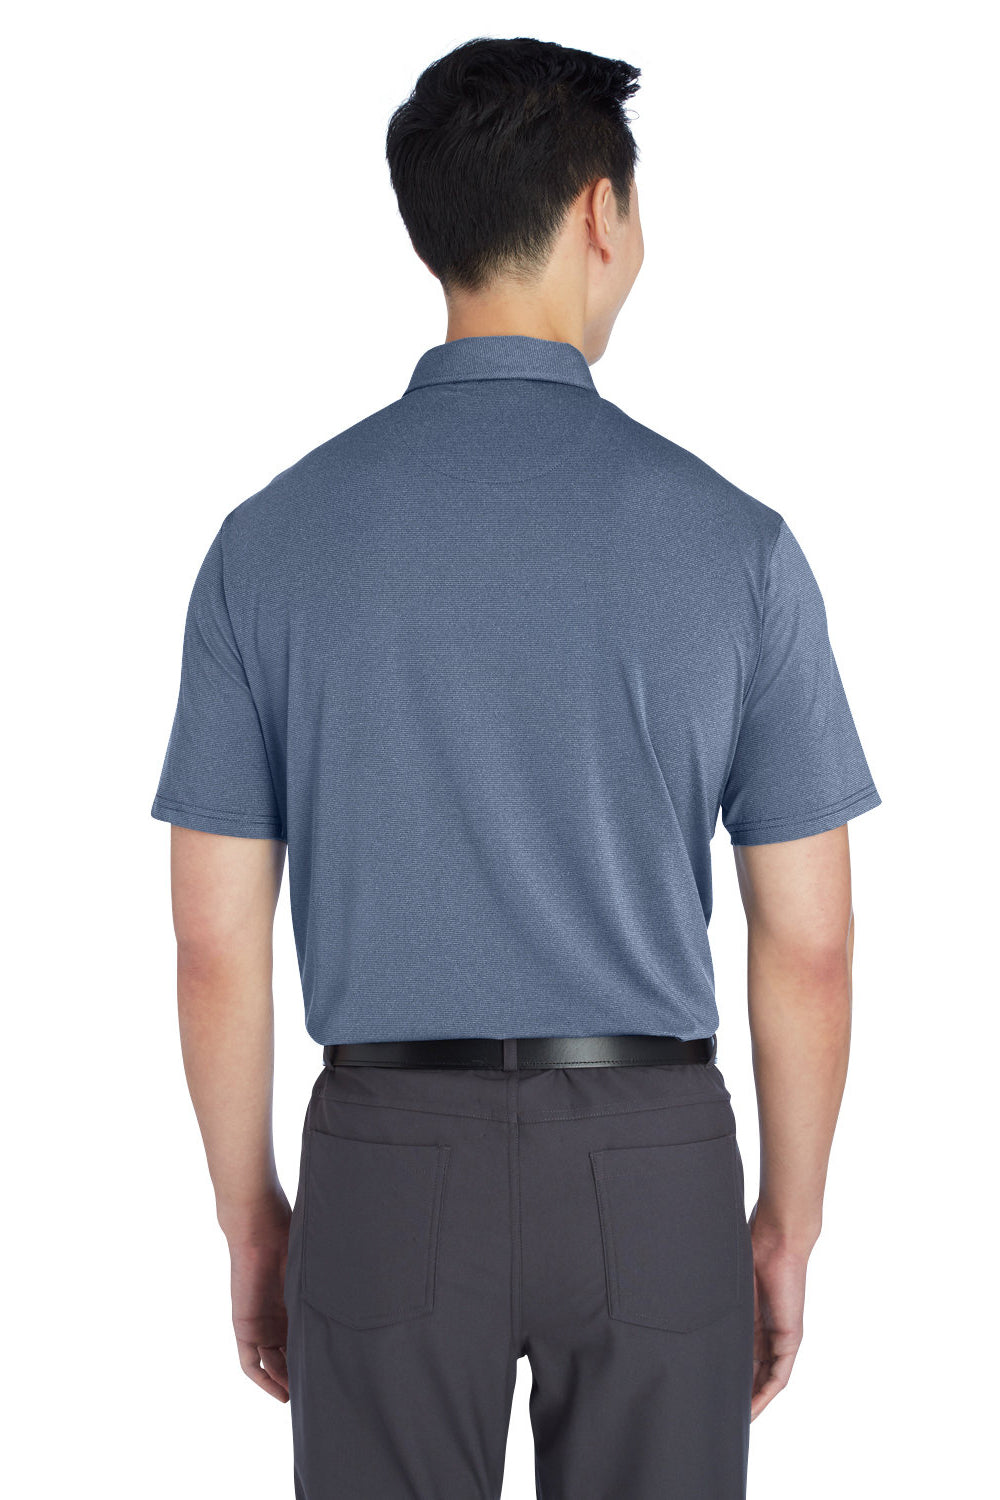 Swannies Golf SW1000 Mens Parker Short Sleeve Polo Shirt Navy Blue Back